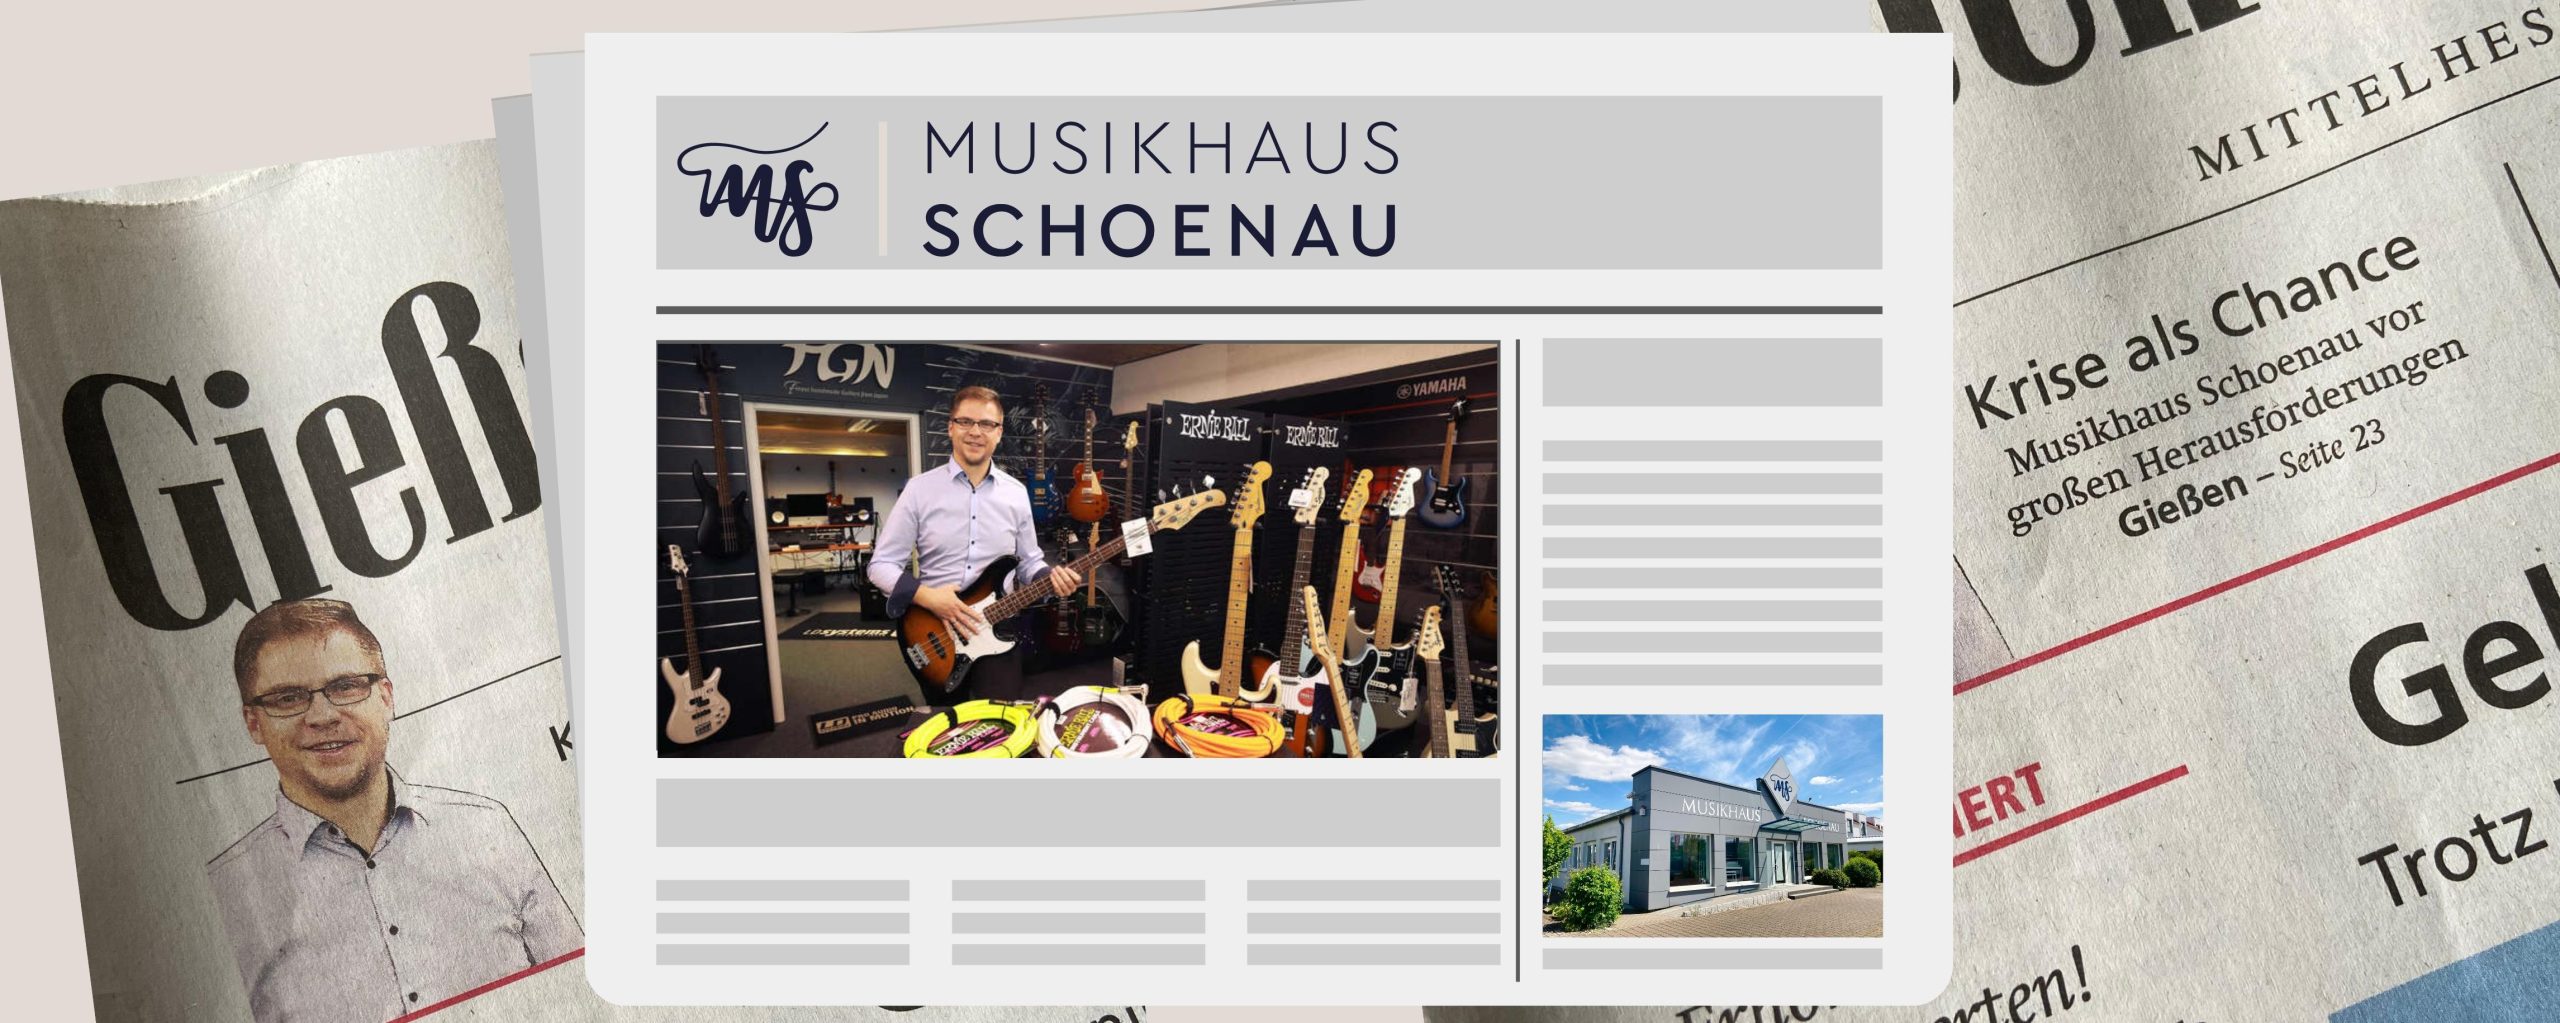 Presse-Musikhaus-Schoenau-Krise-als-Chance